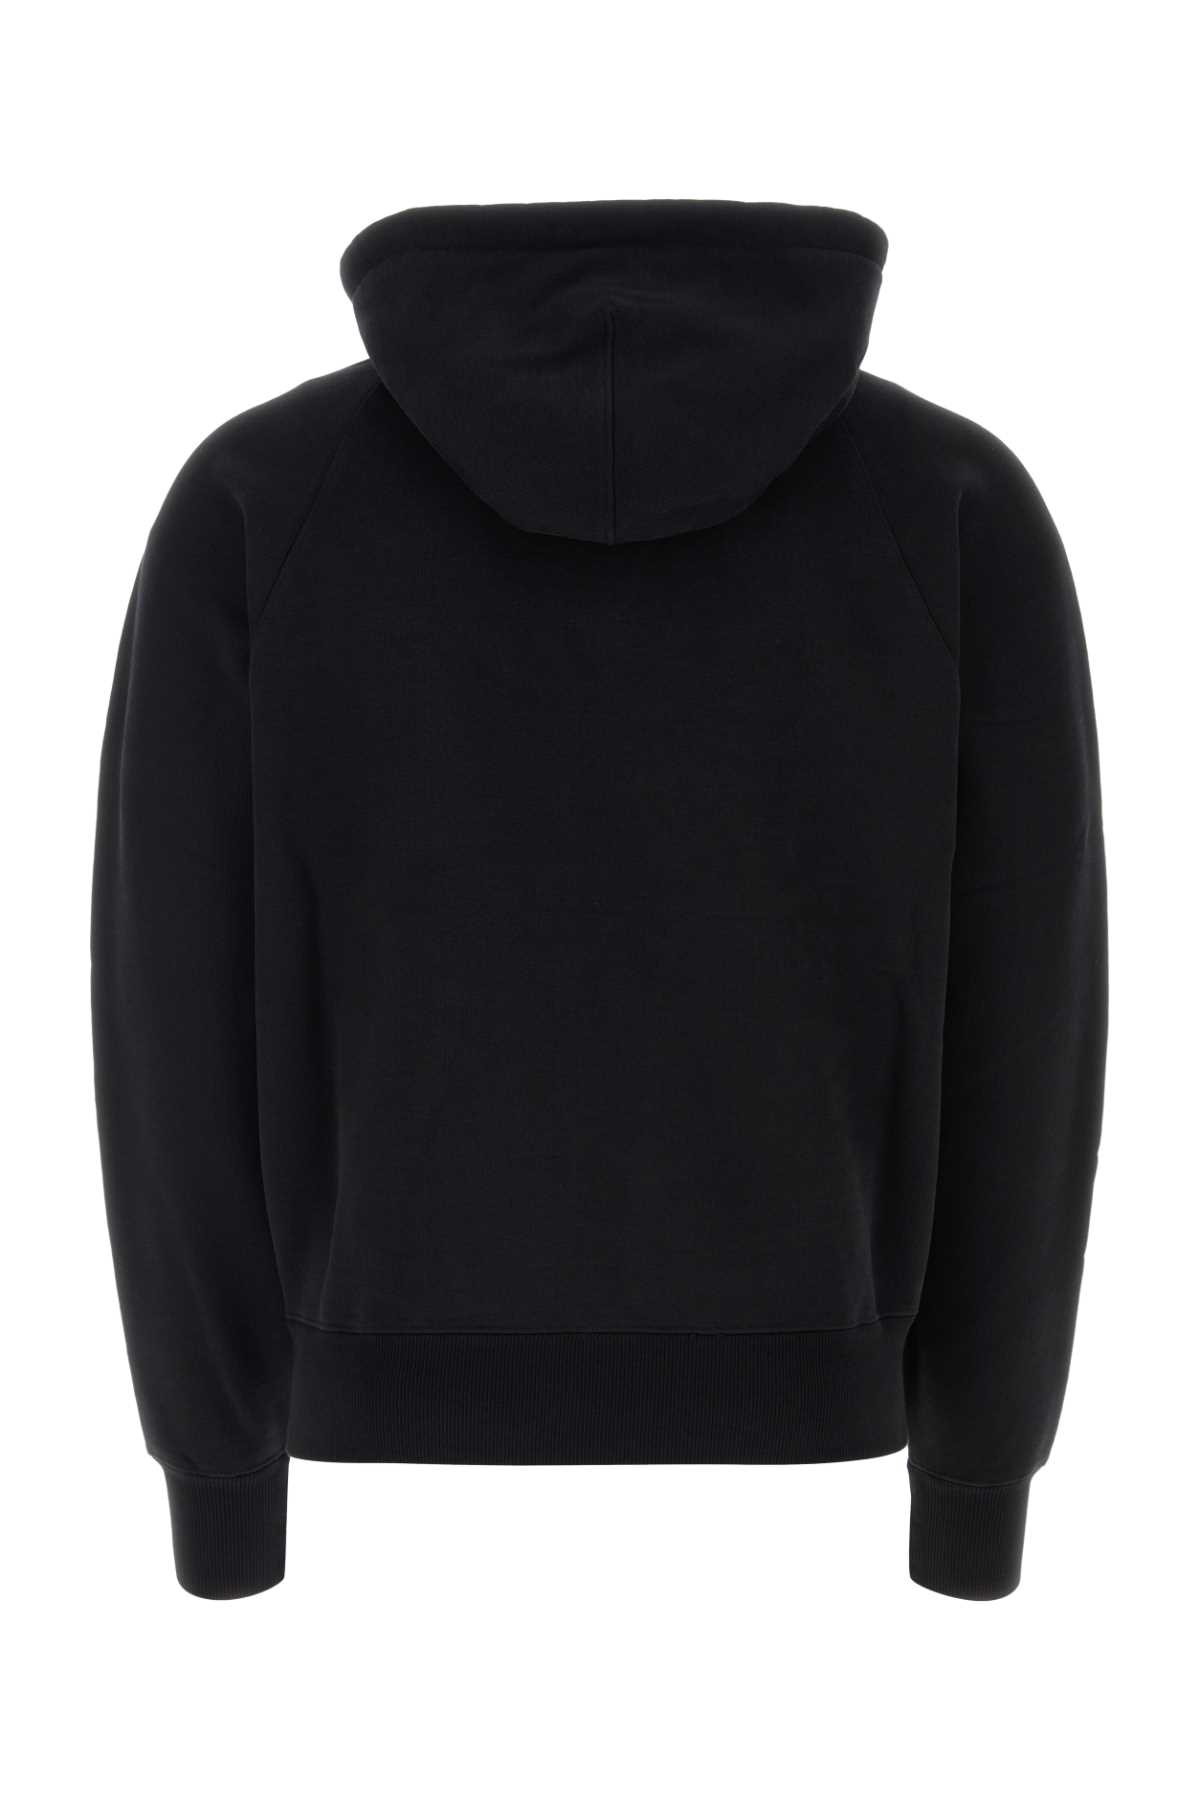 Shop Ami Alexandre Mattiussi Black Stretch Cotton Sweatshirt